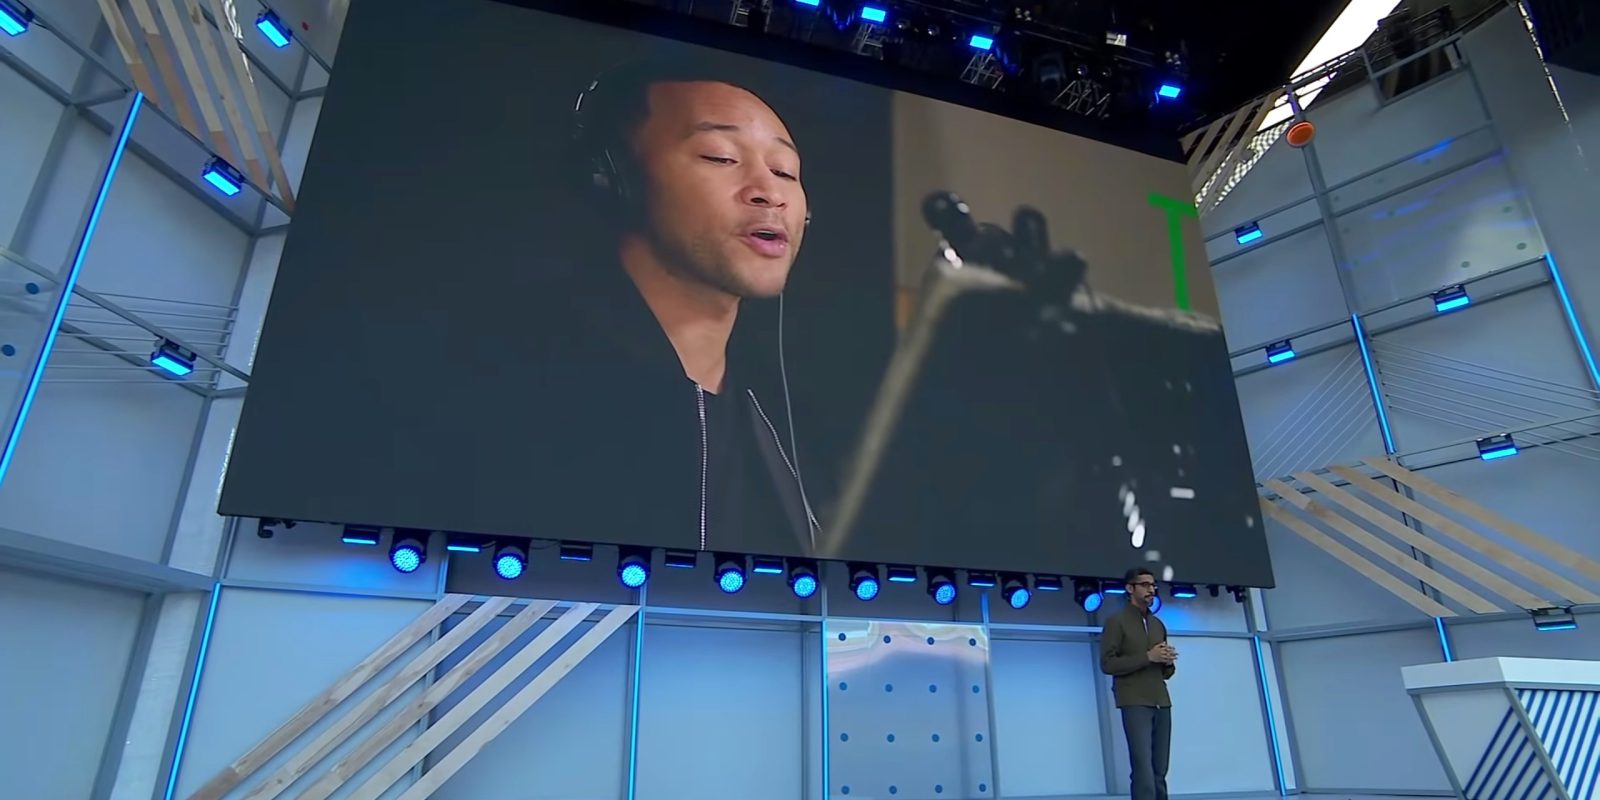 Google Assistant John Legend